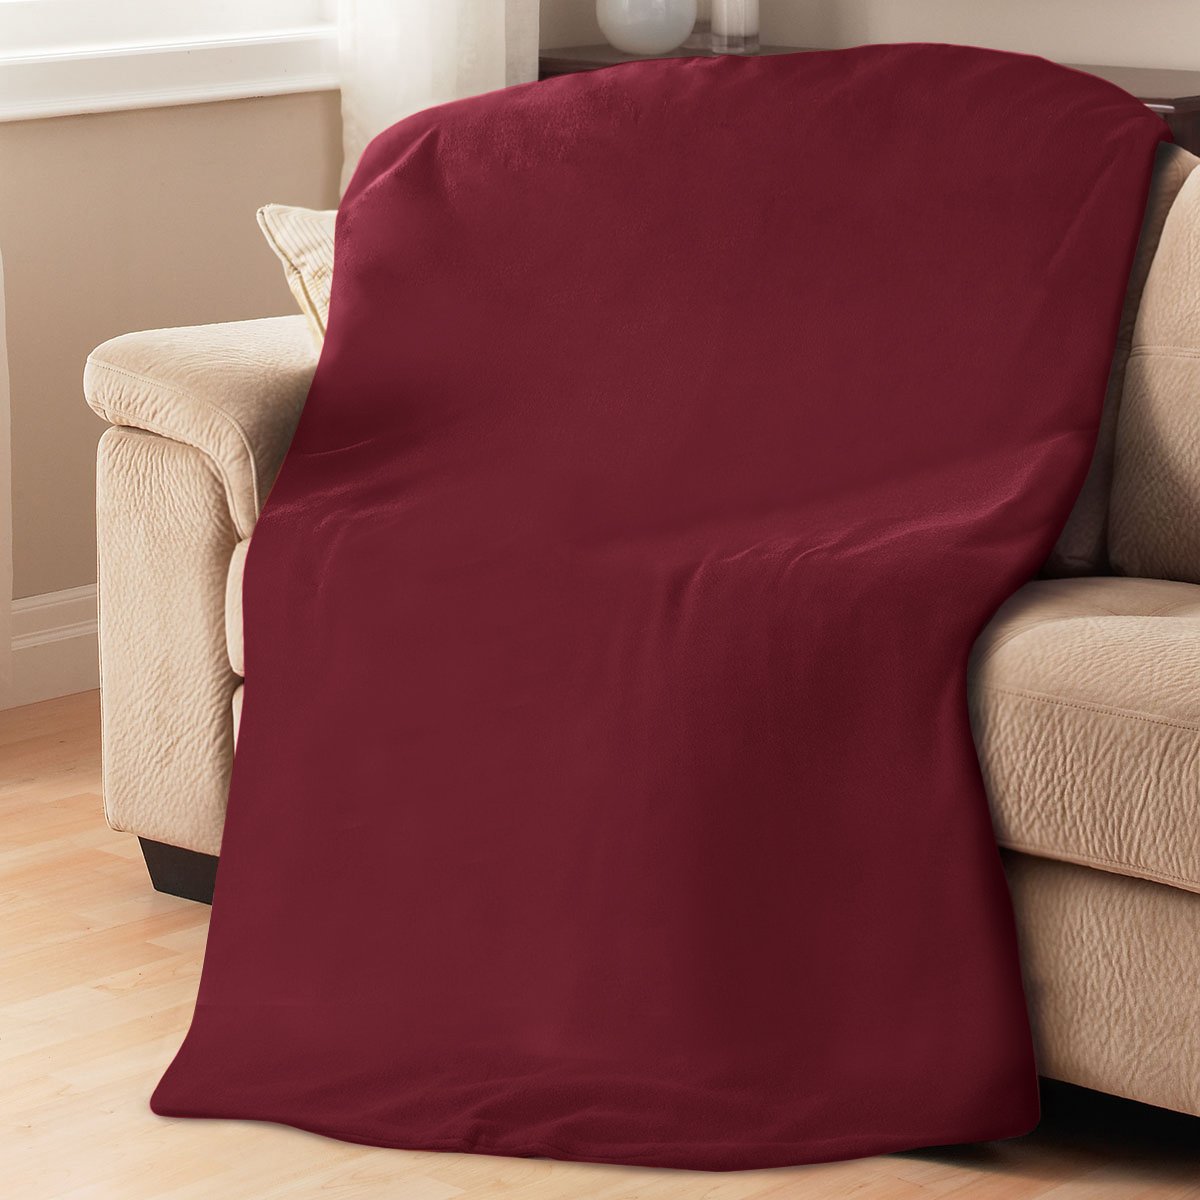 Sunbeam Electric Blanket Throw Fleece (50" x 60"), Red - image 3 of 6